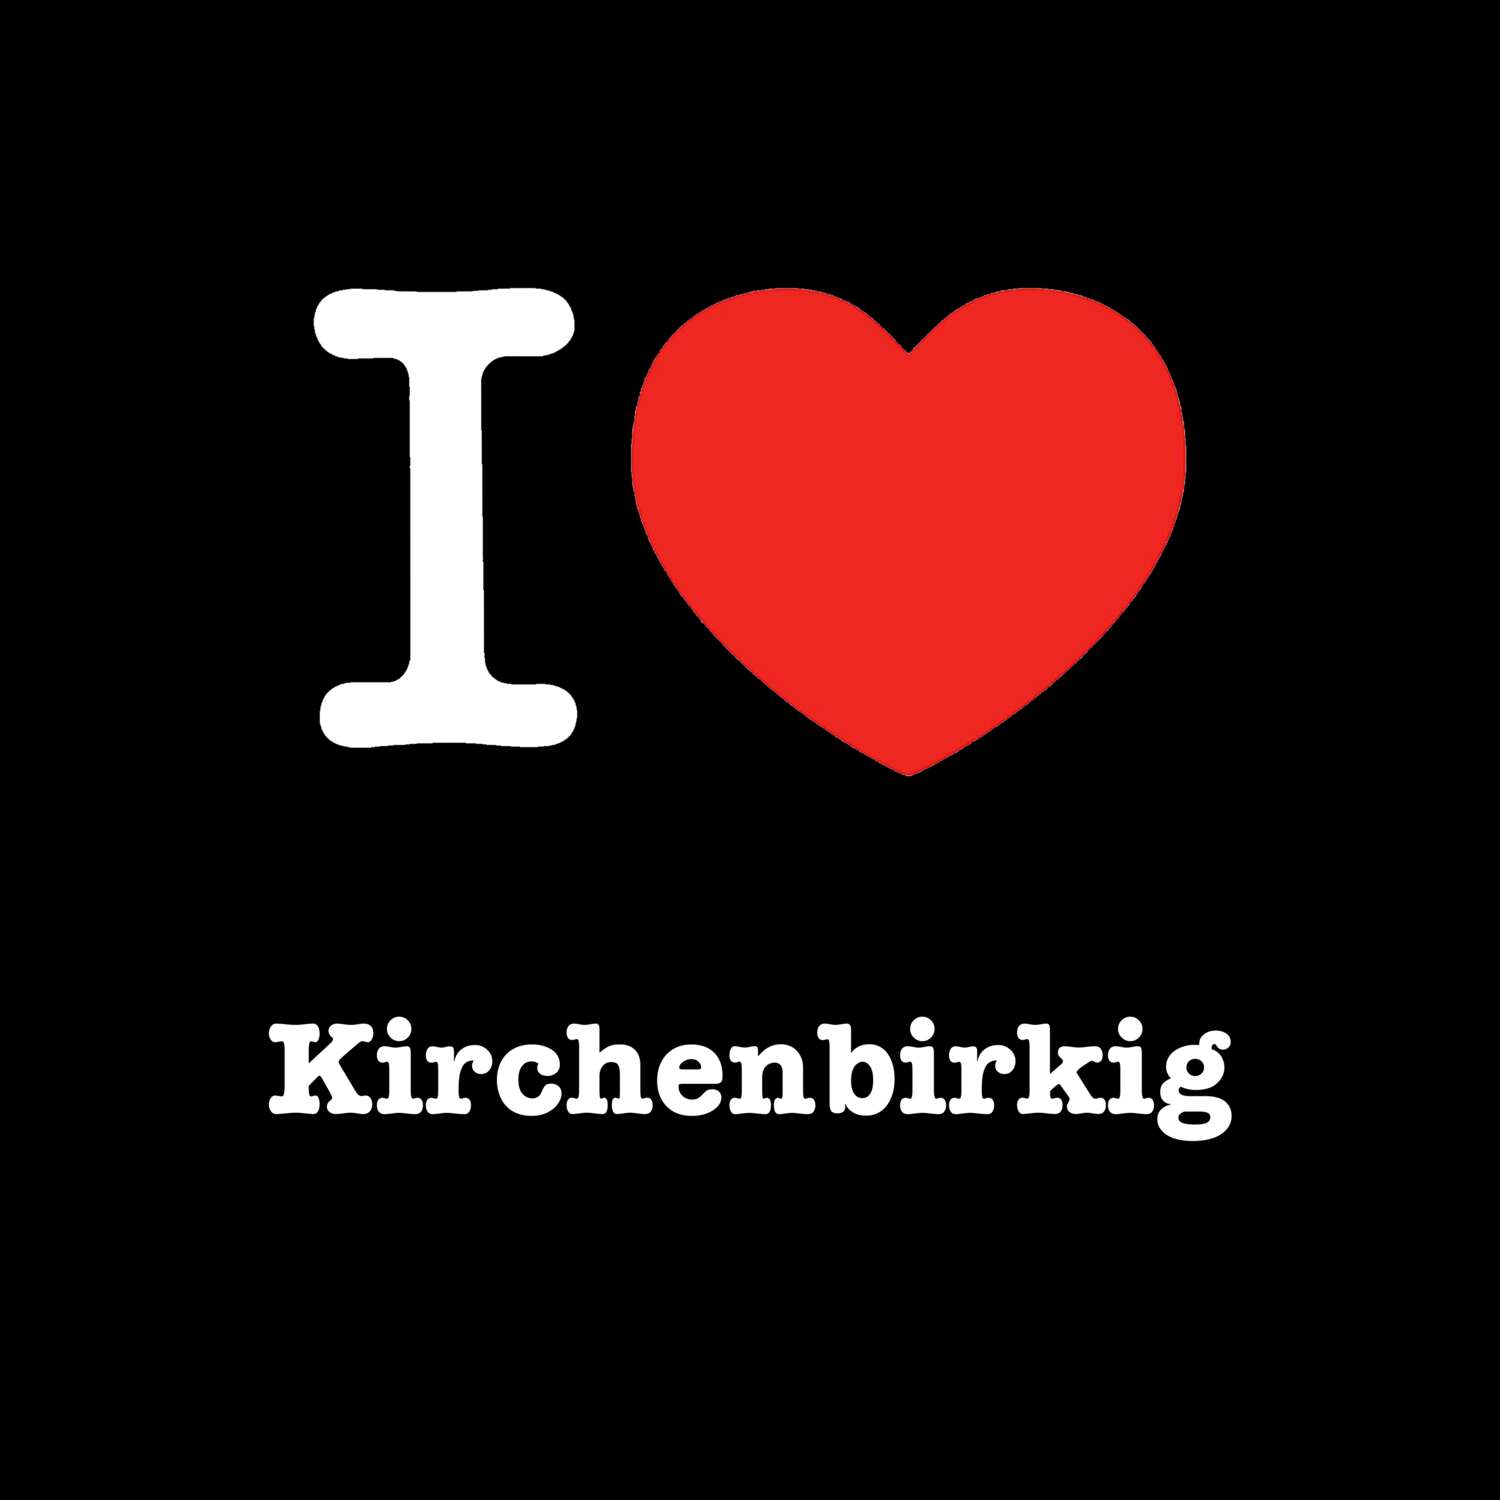 Kirchenbirkig T-Shirt »I love«